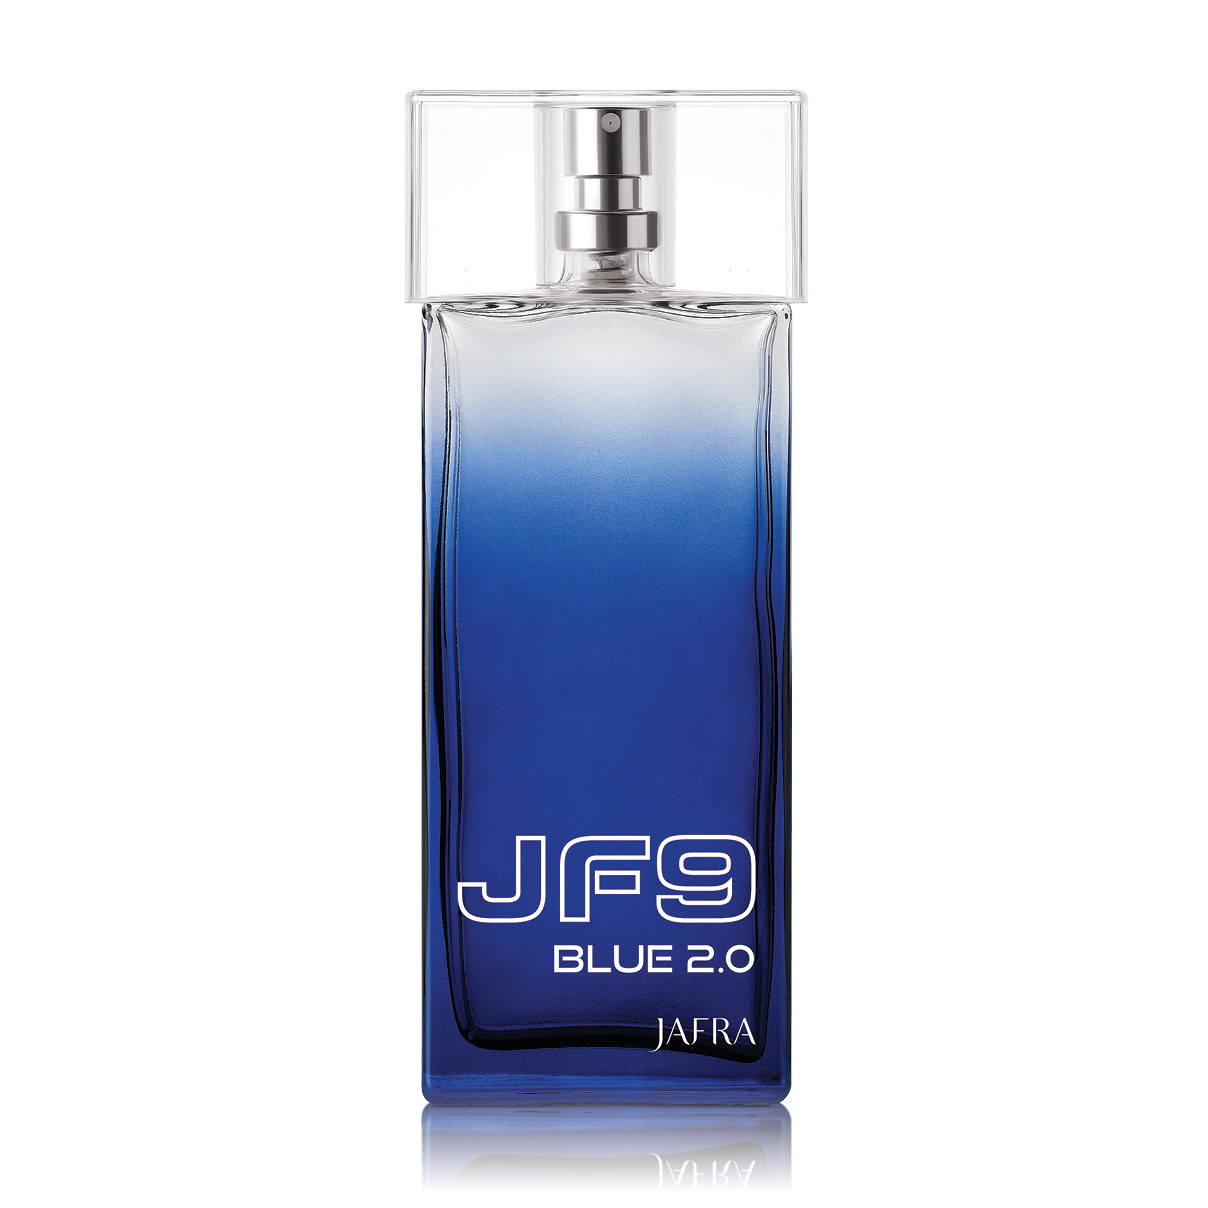 JF9 Blue 2.0